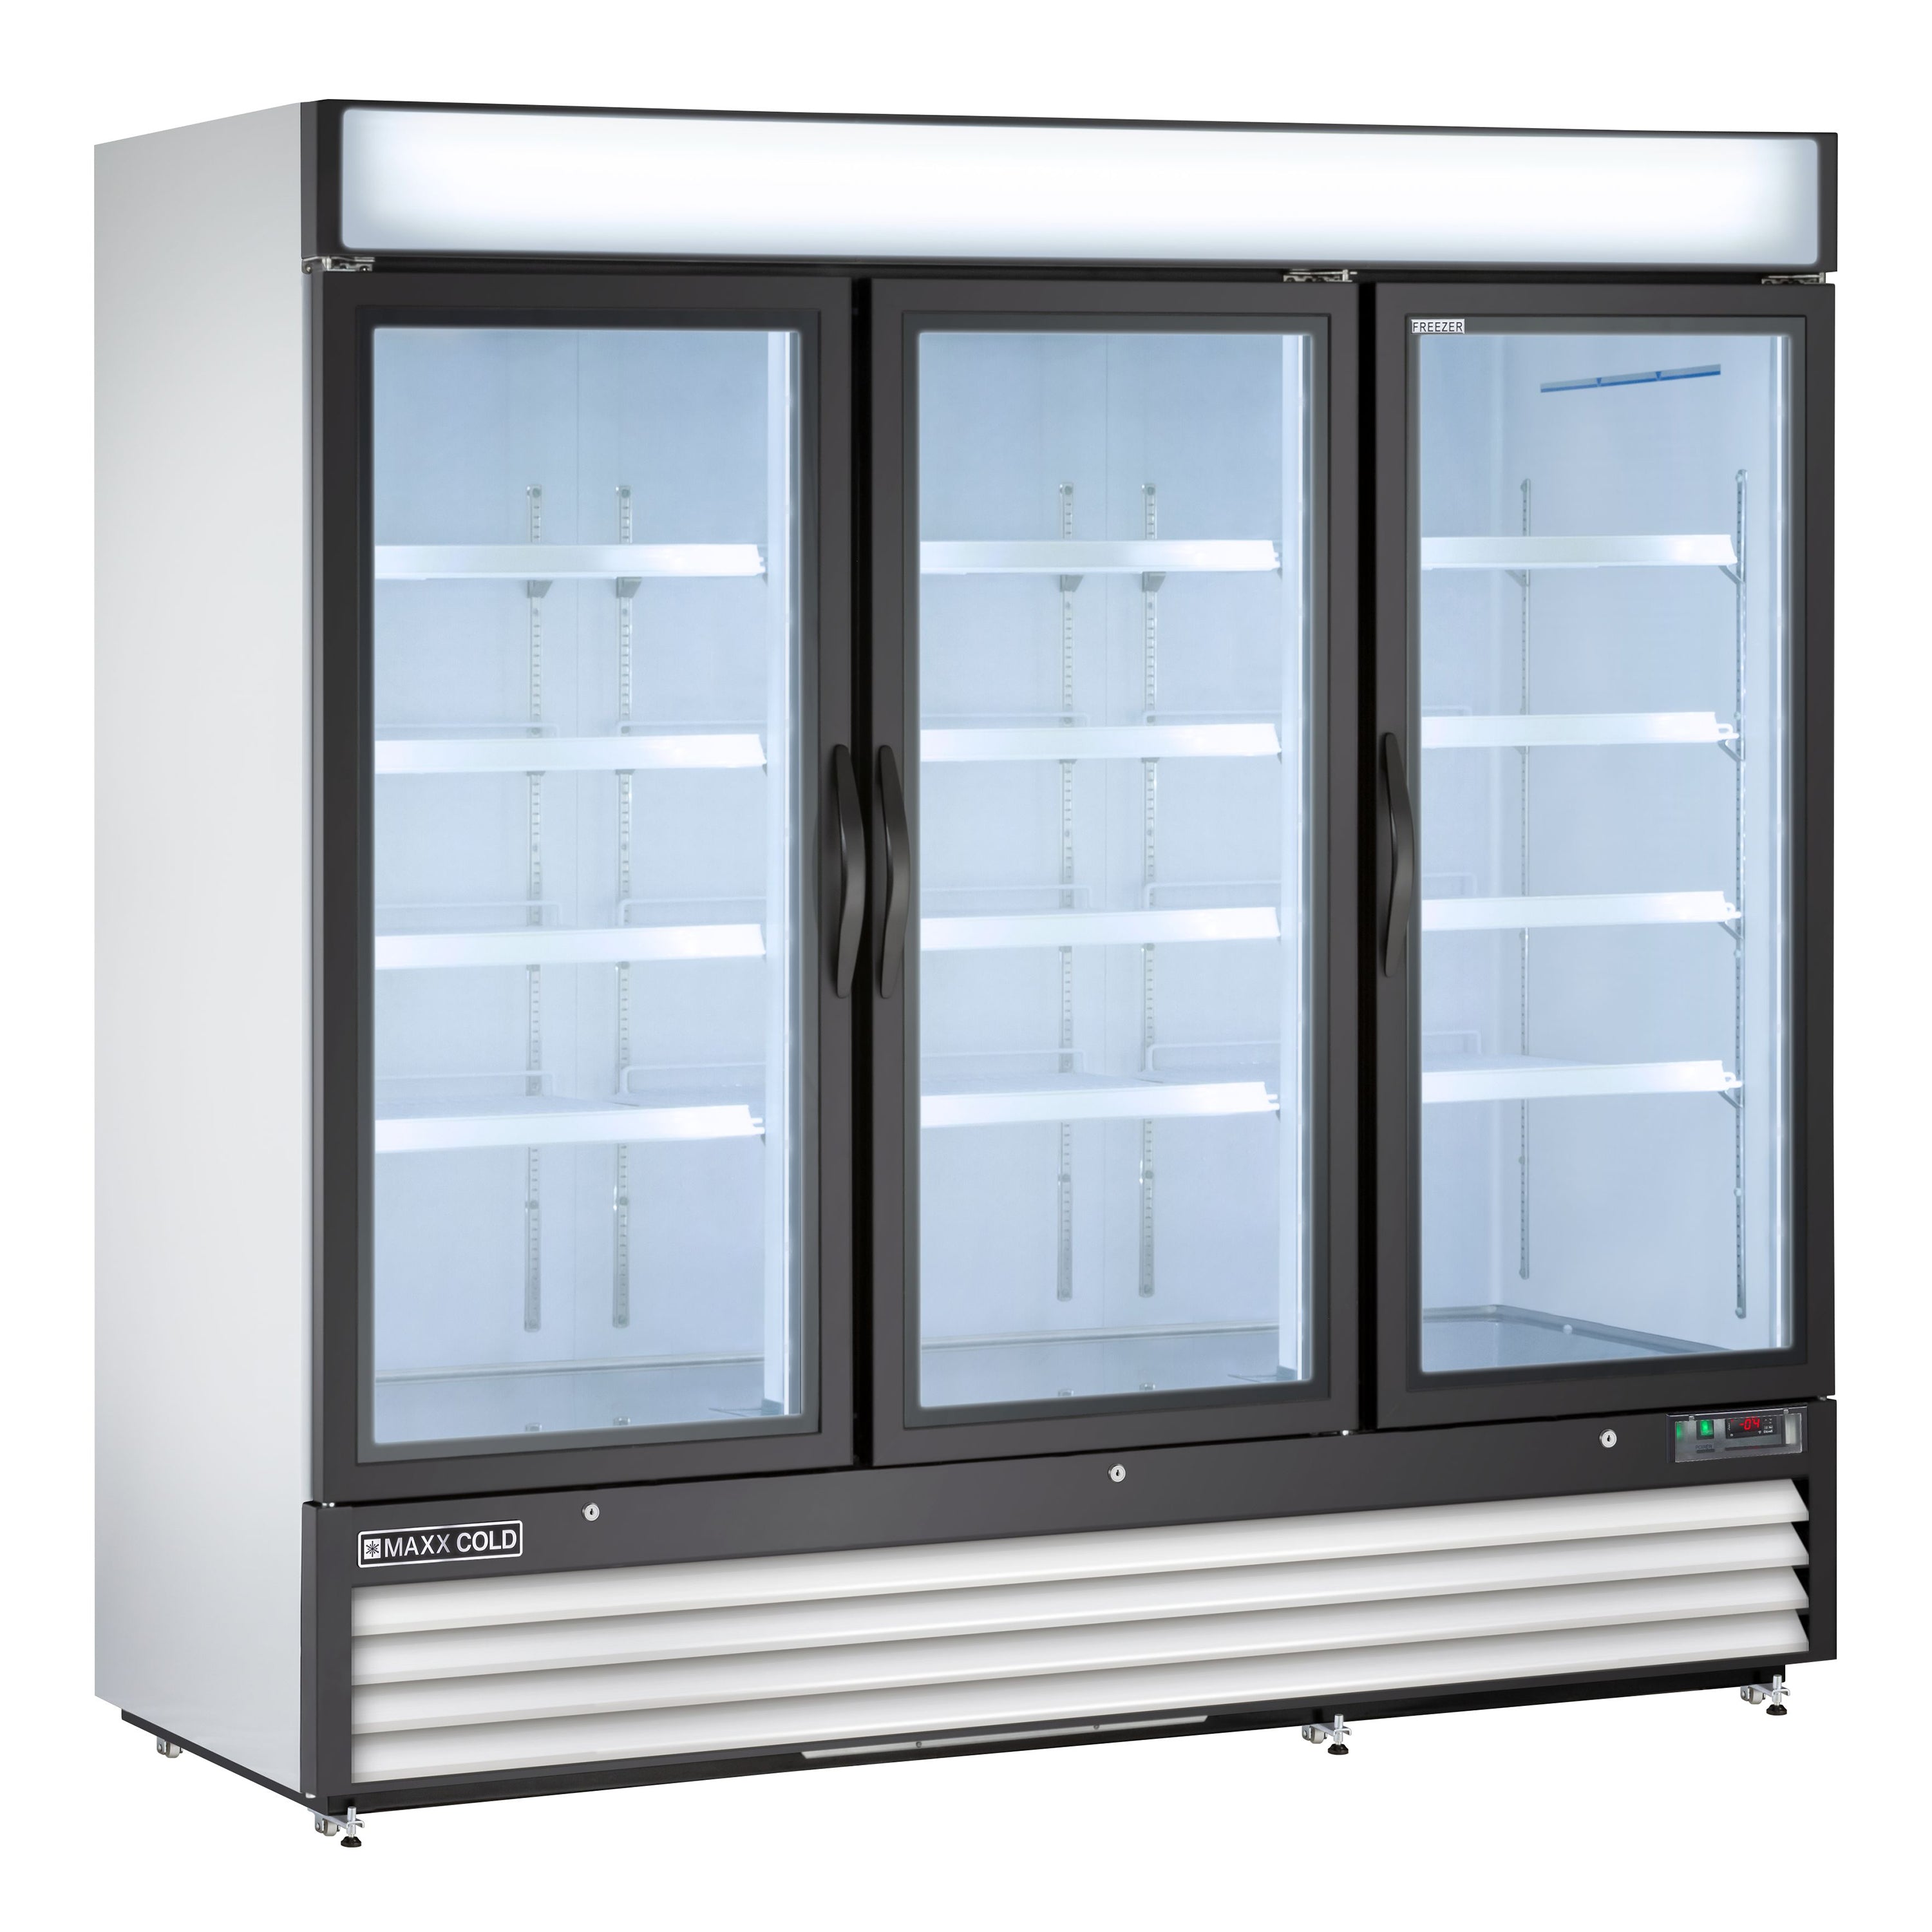 Maxx Cold - MXM3-72FHC, Maxx Cold Triple Glass Door Merchandiser Freezer, Free Standing, 81"W, 72 cu. ft. Storage Capacity, in White